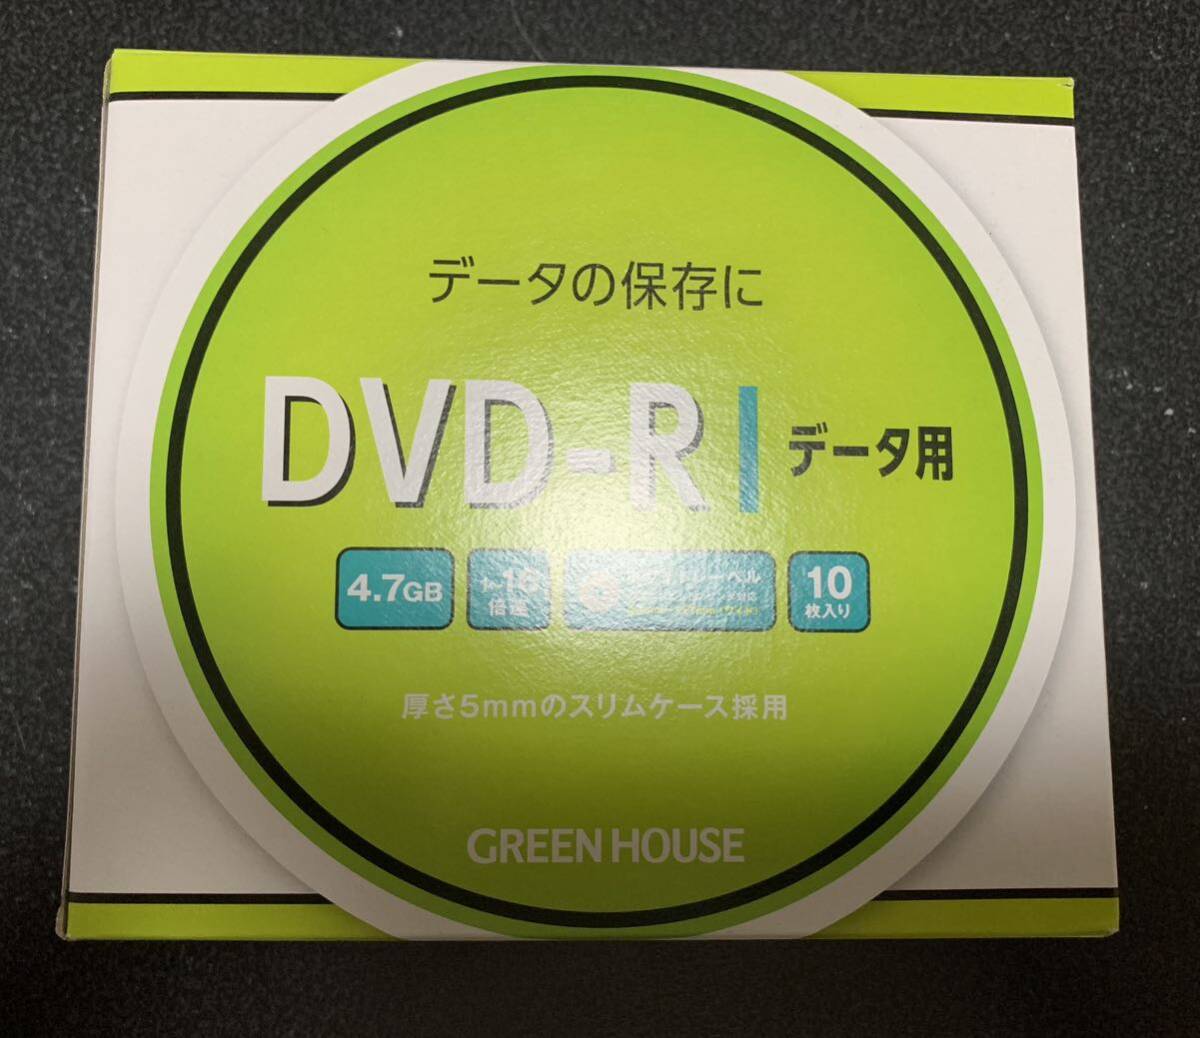 GREEN HOUSE DVD-R 10 sheets entering 